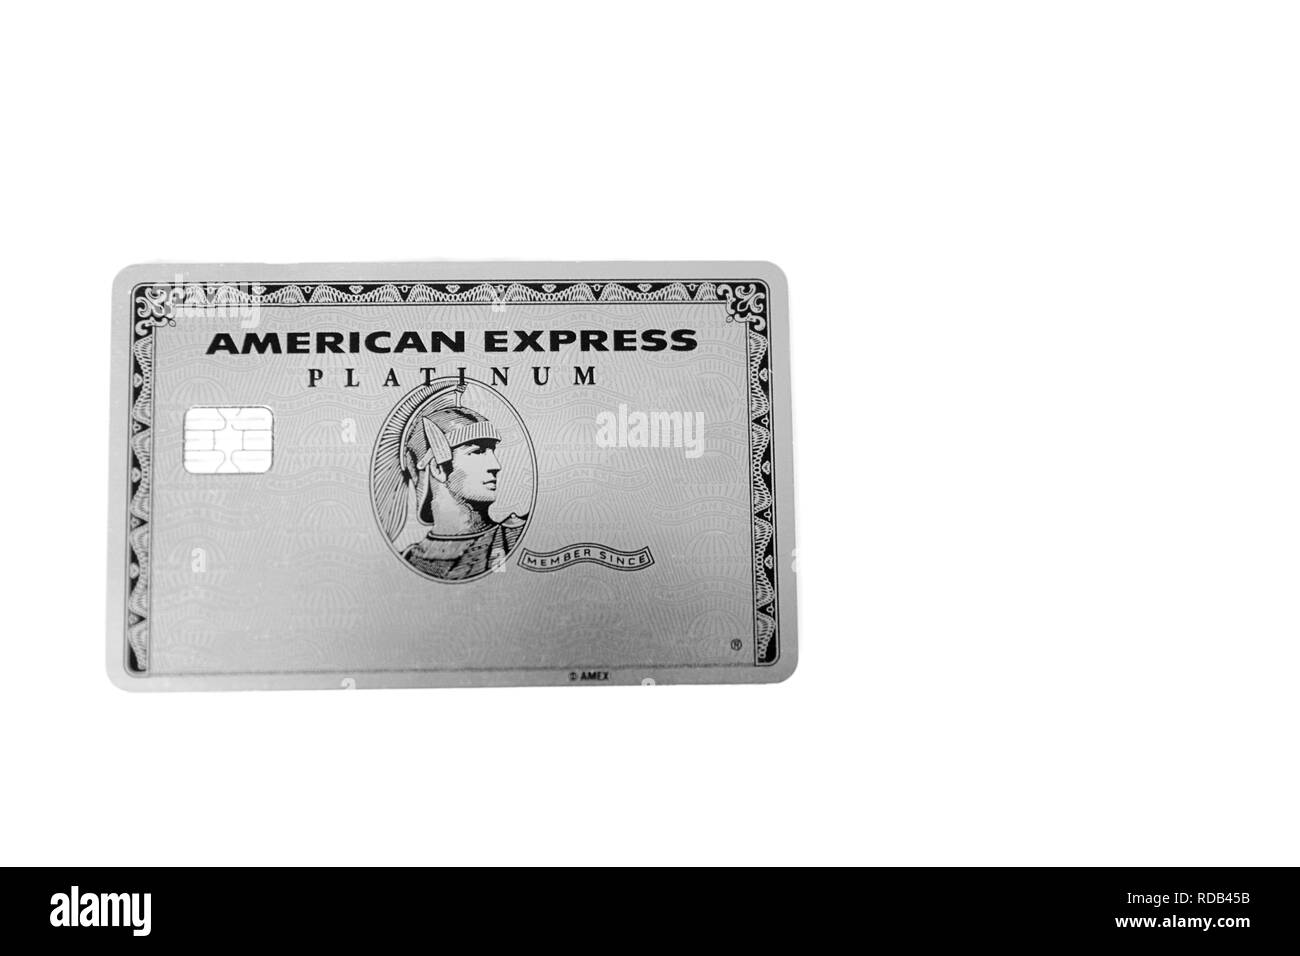 Platinum silver american express card Stock Photo